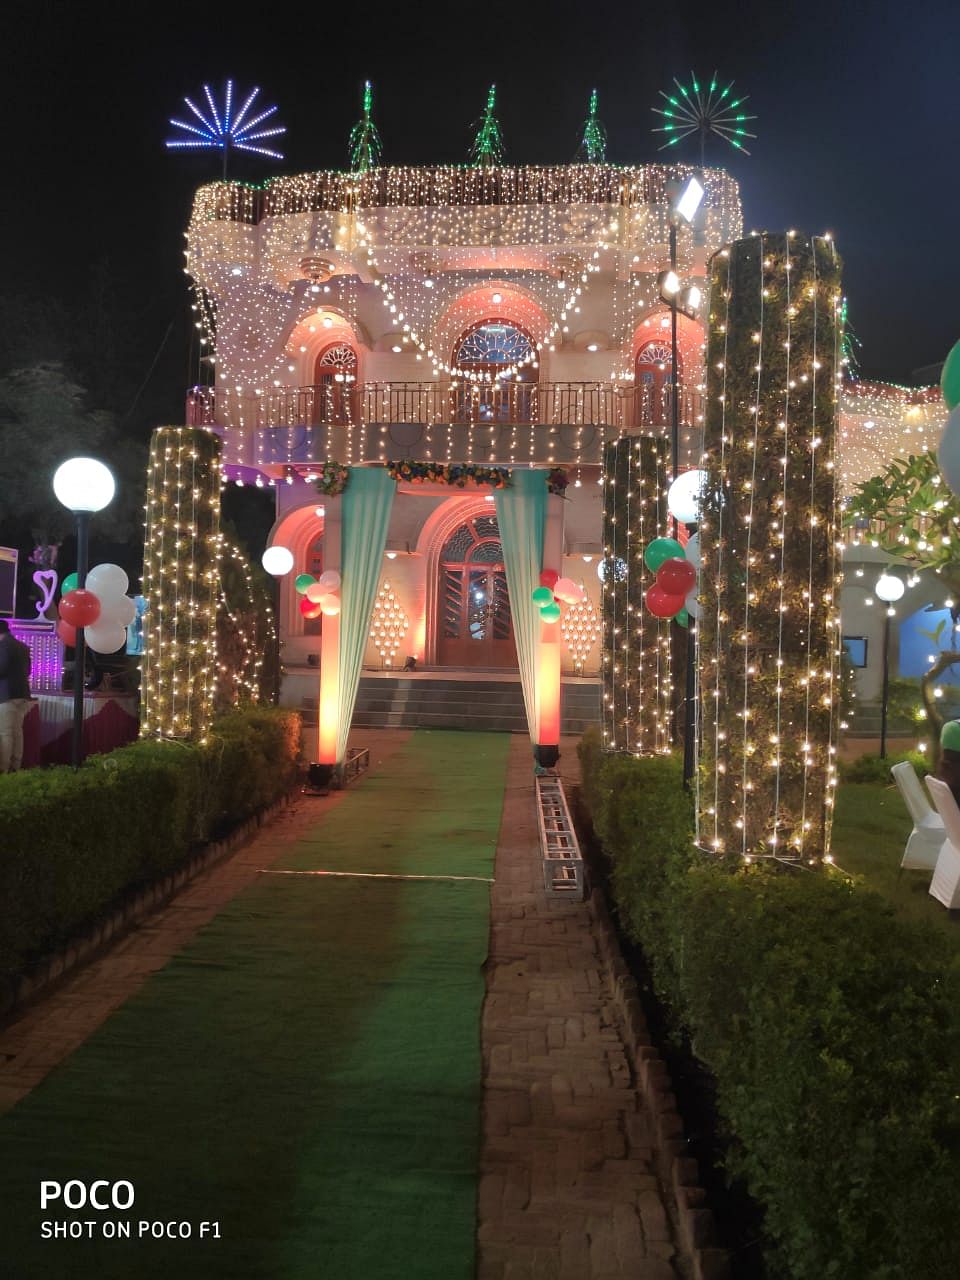 Suroth Palace in Hindaun City, Gurgaon